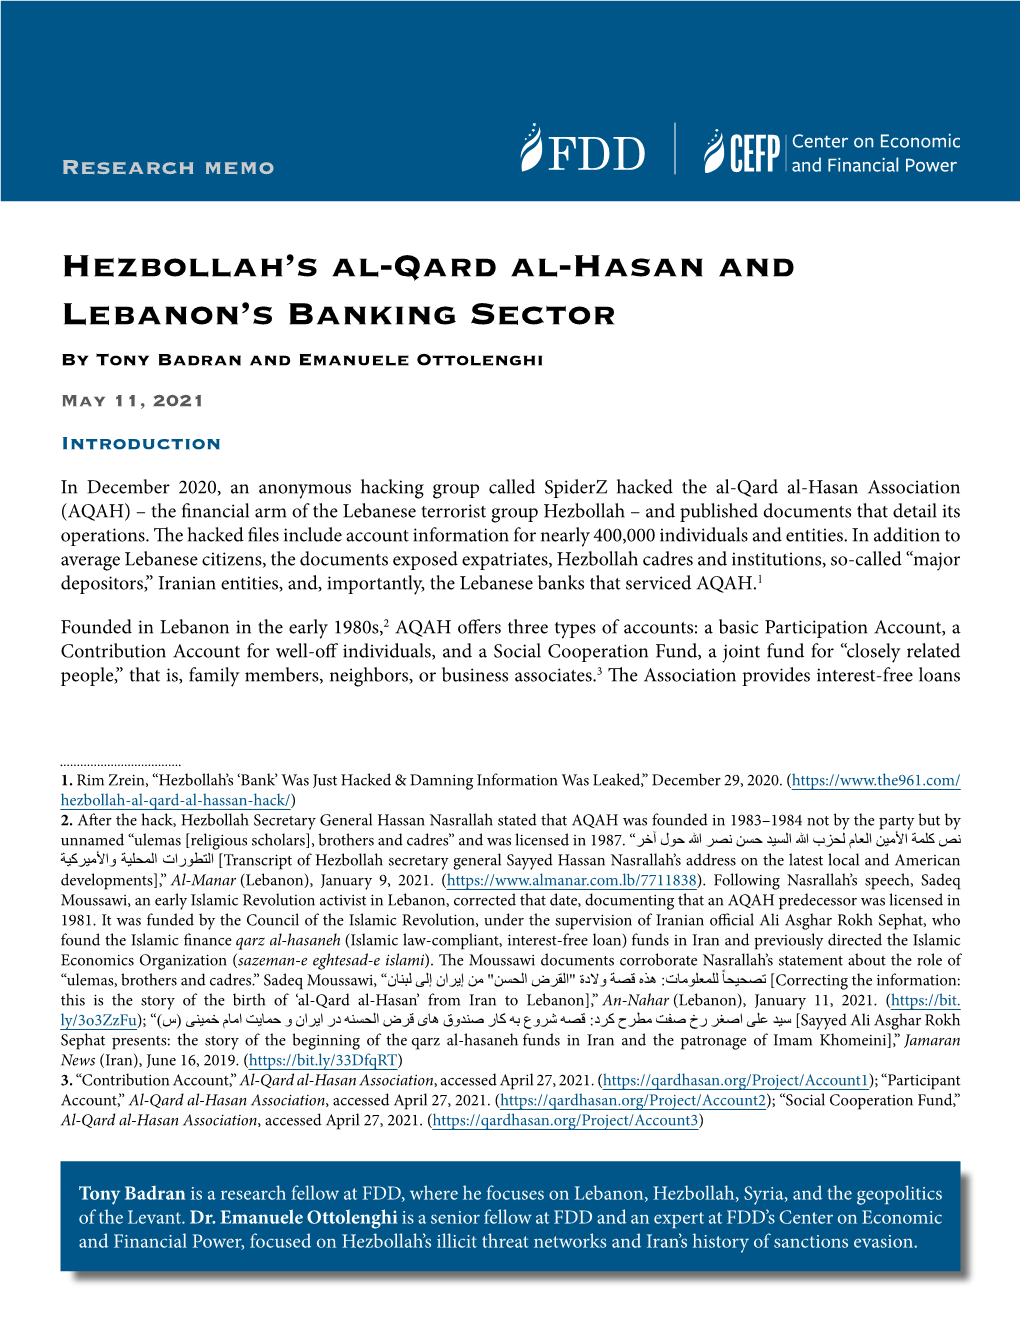 Hezbollah's Al-Qard Al-Hasan and Lebanon's Banking Sector